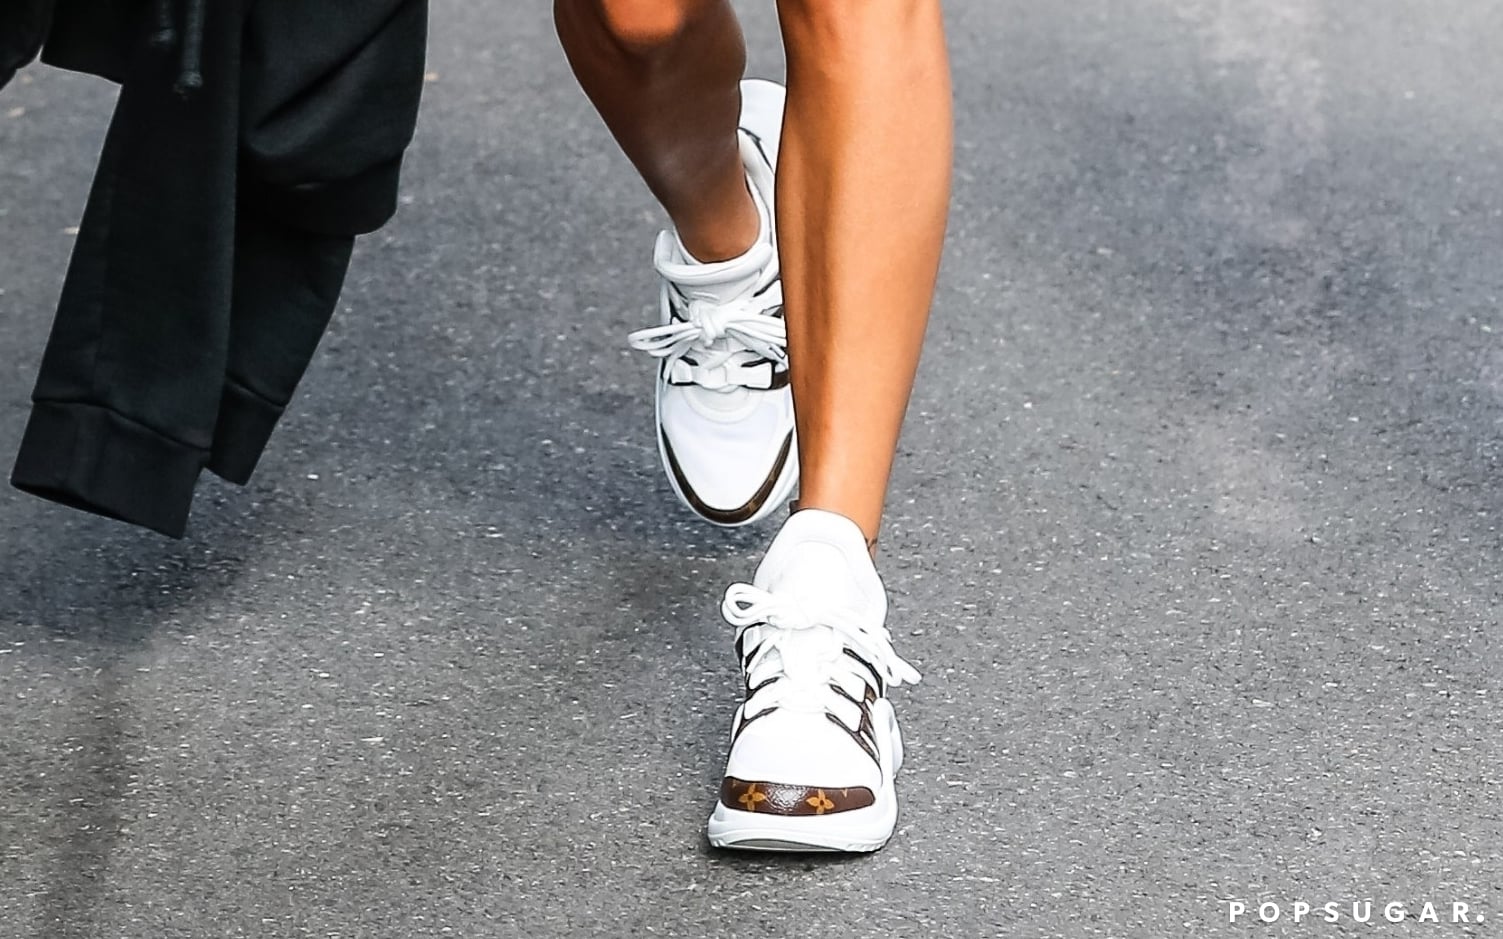 Hailey Baldwin Rocks Louis Vuitton Archlight Sneakers & No Pants